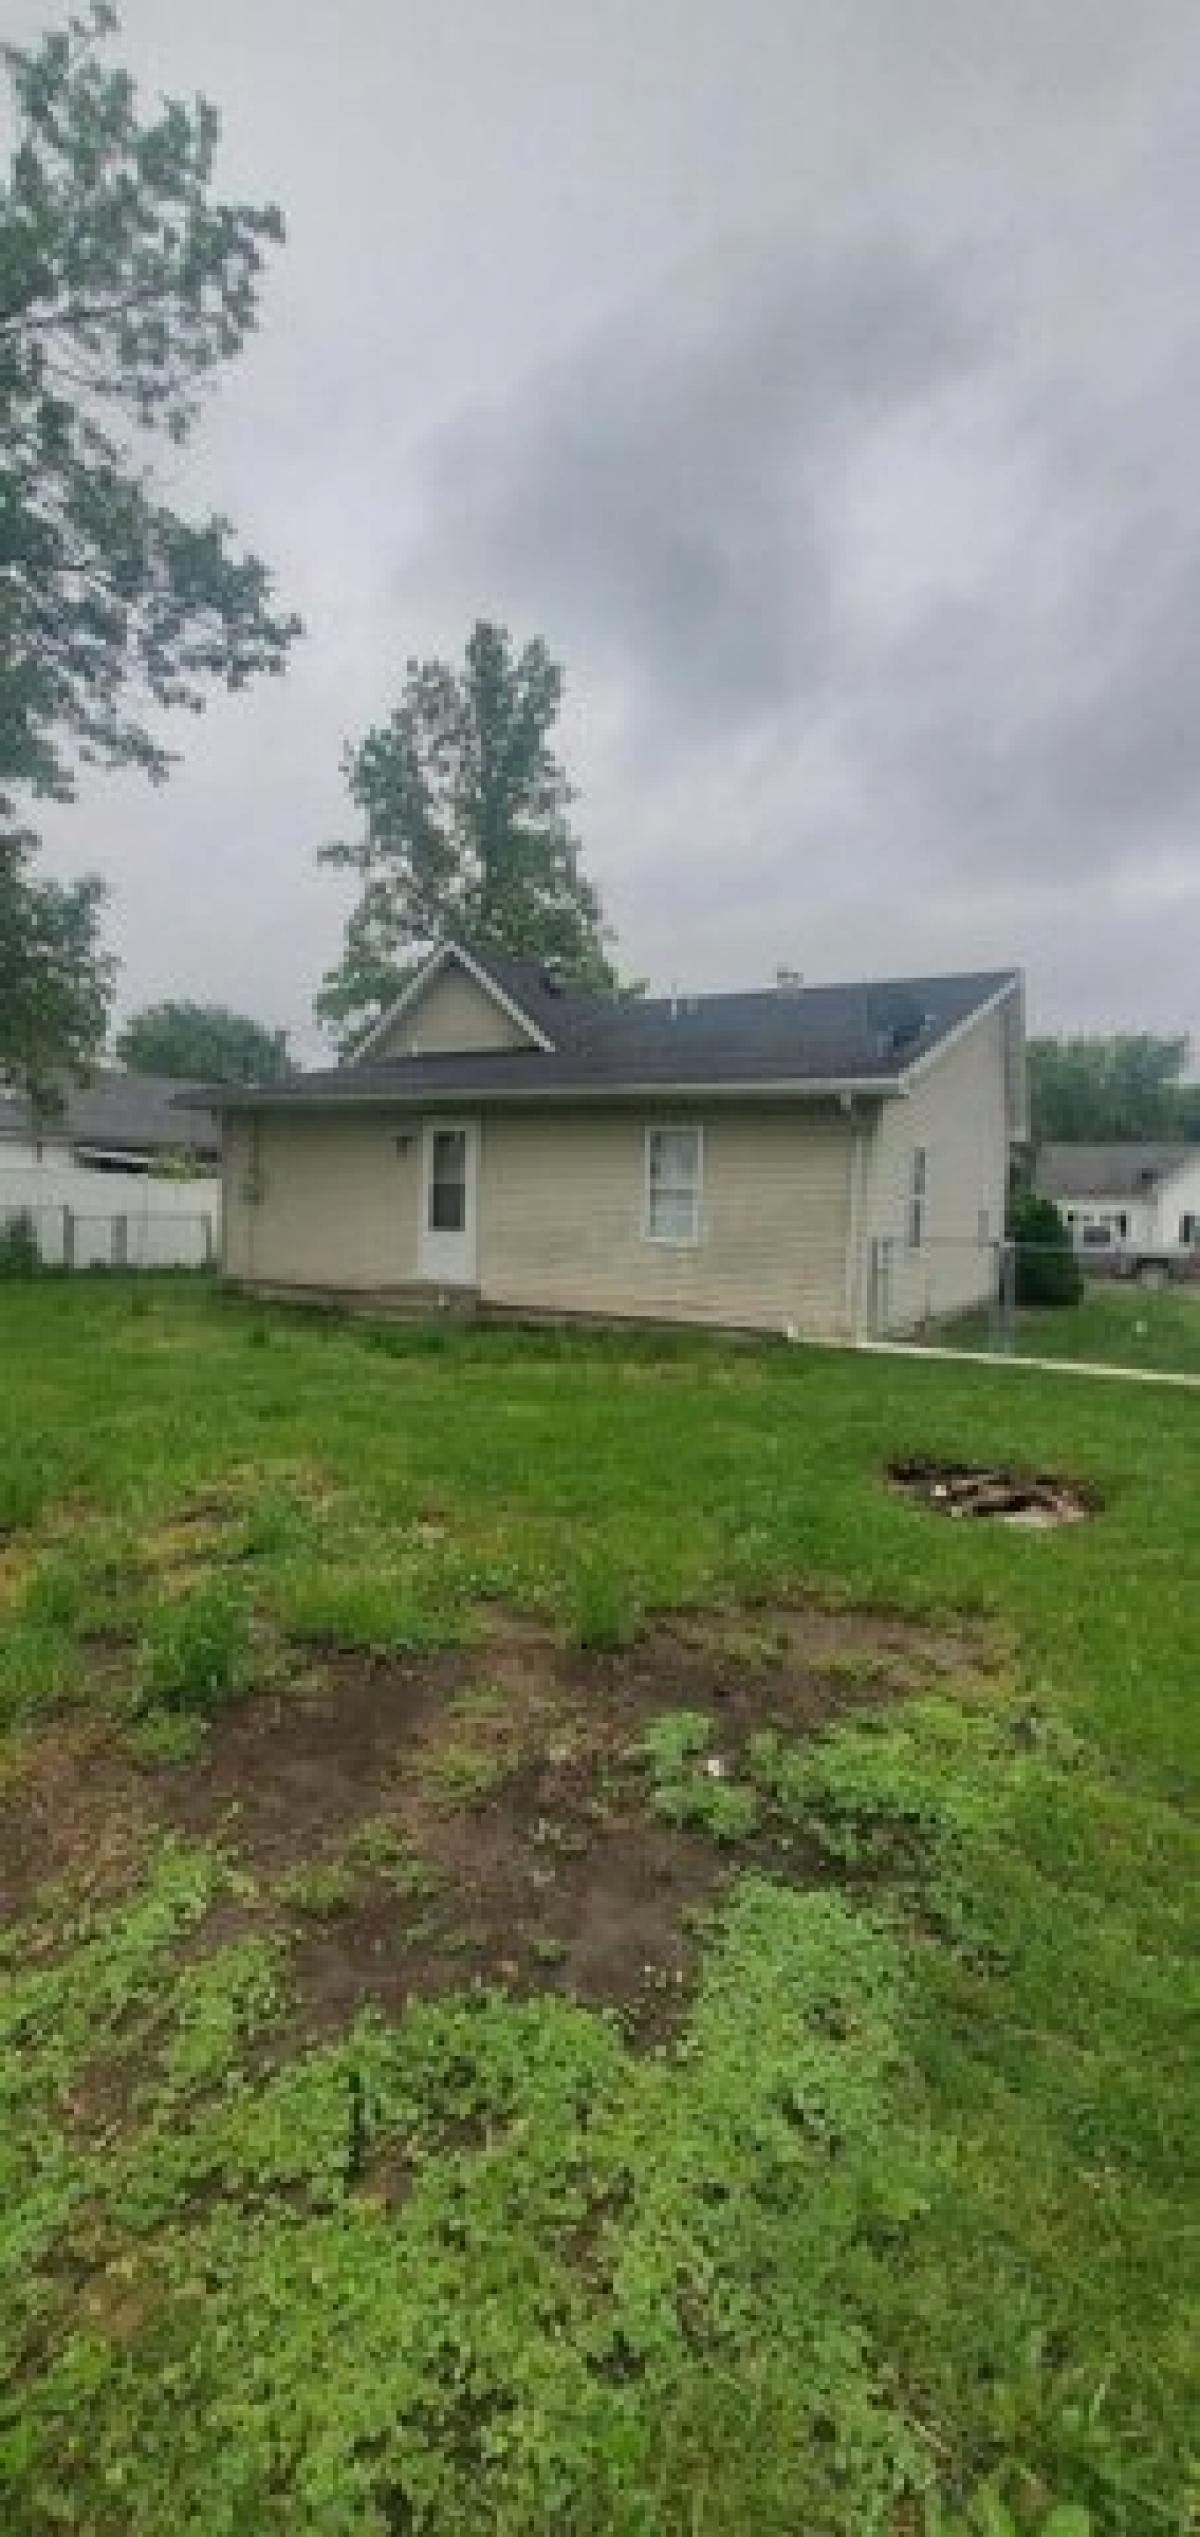 Picture of Home For Sale in Vandalia, Missouri, United States